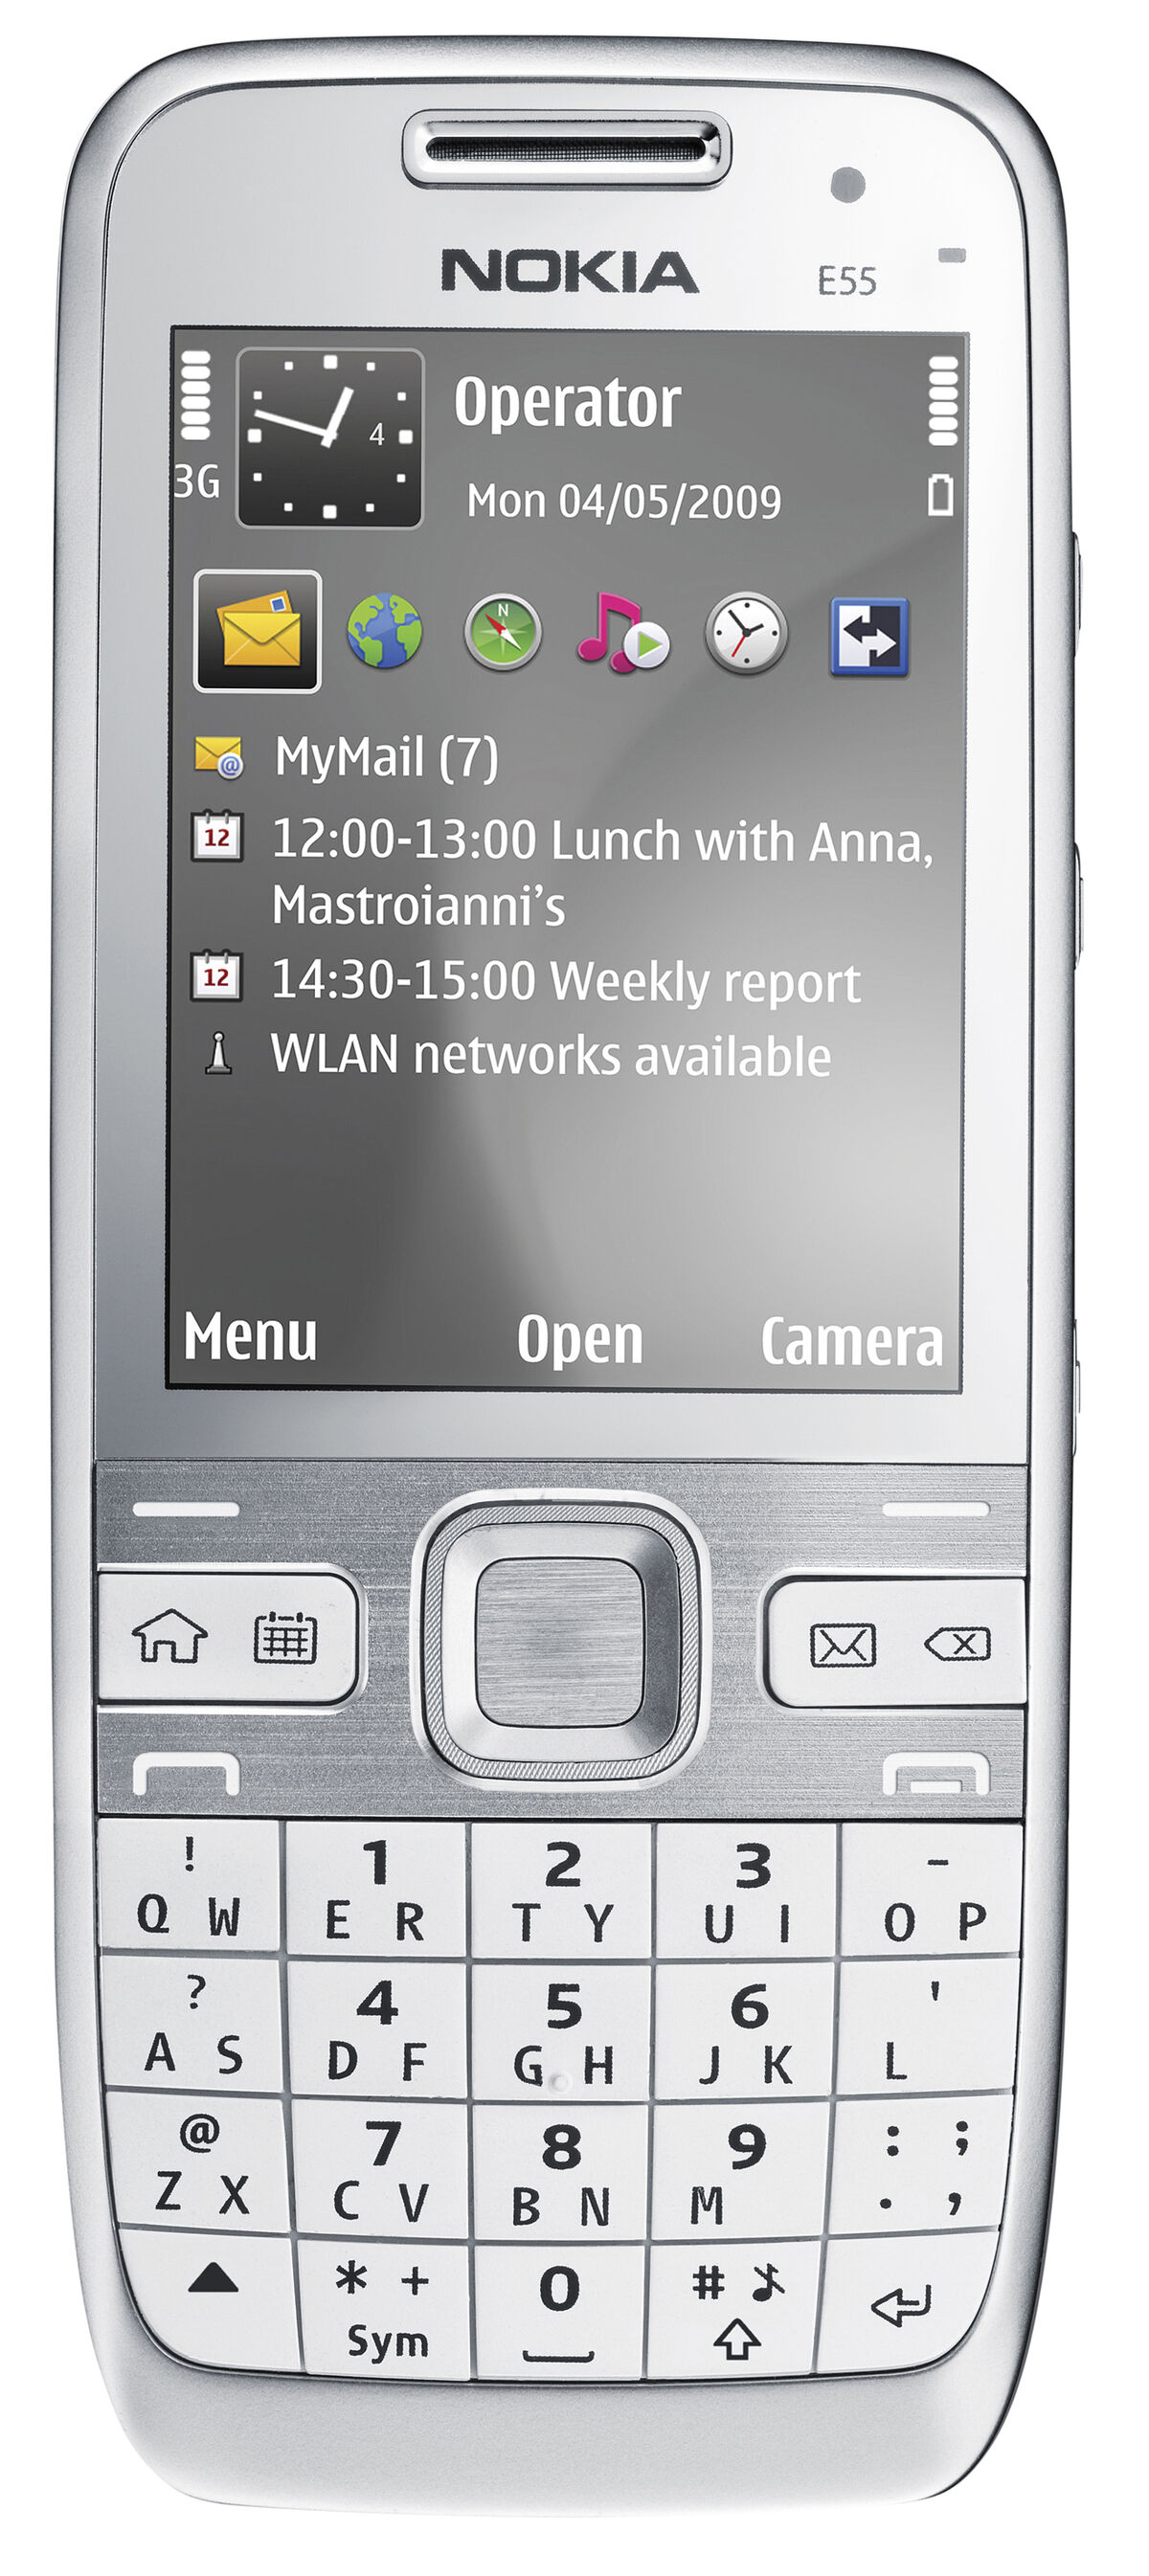 Nokia E63 - Wikipedia